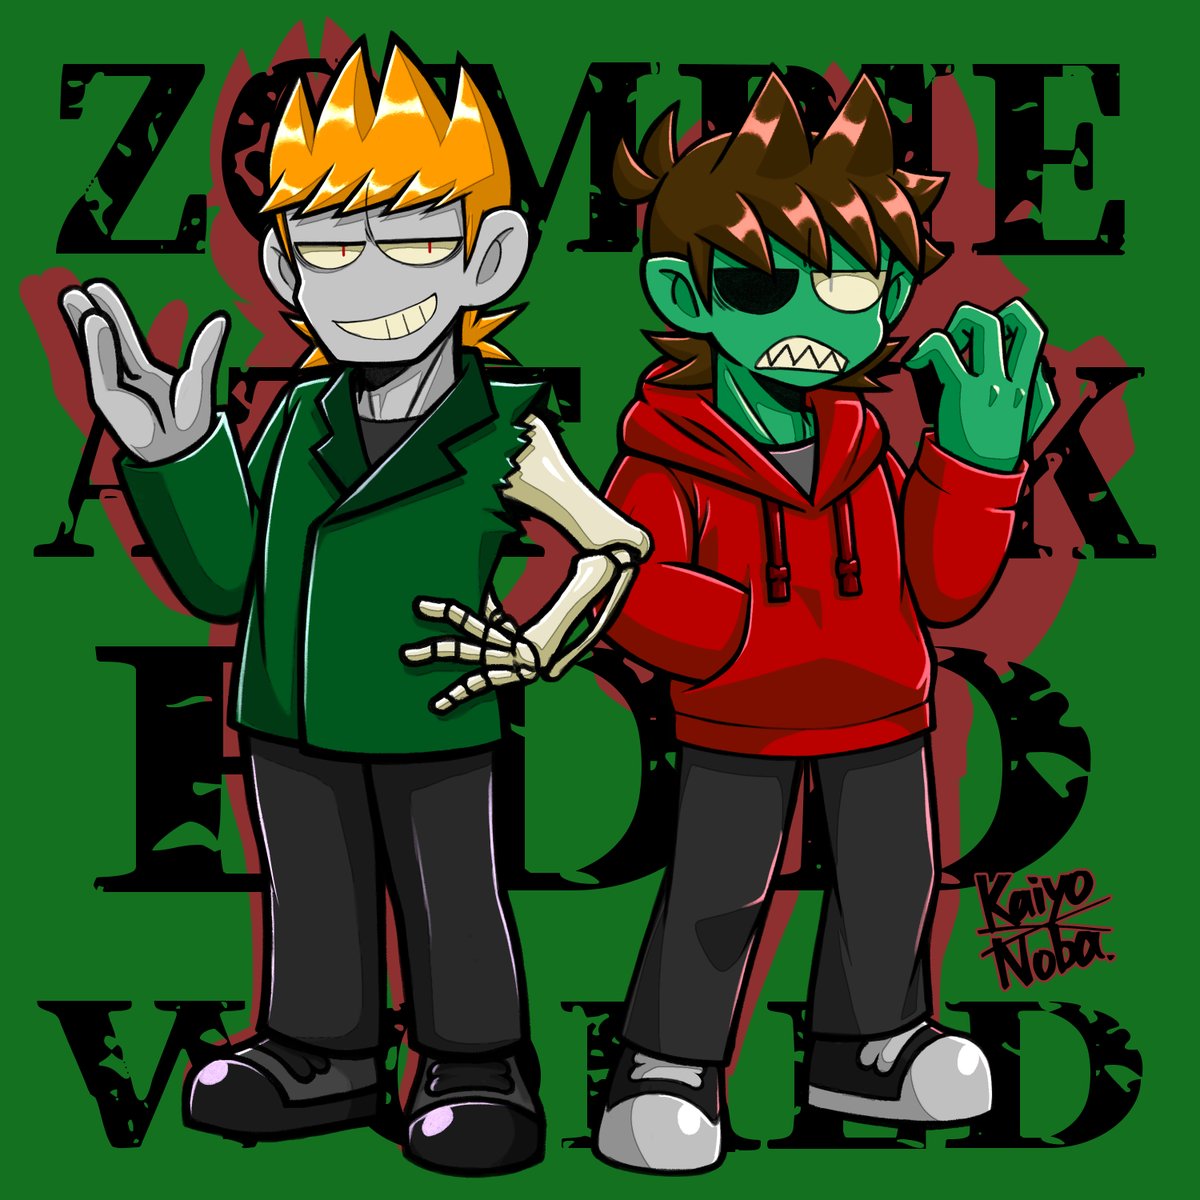 ZombieAttack
#eddsworld #eddsworldfanart